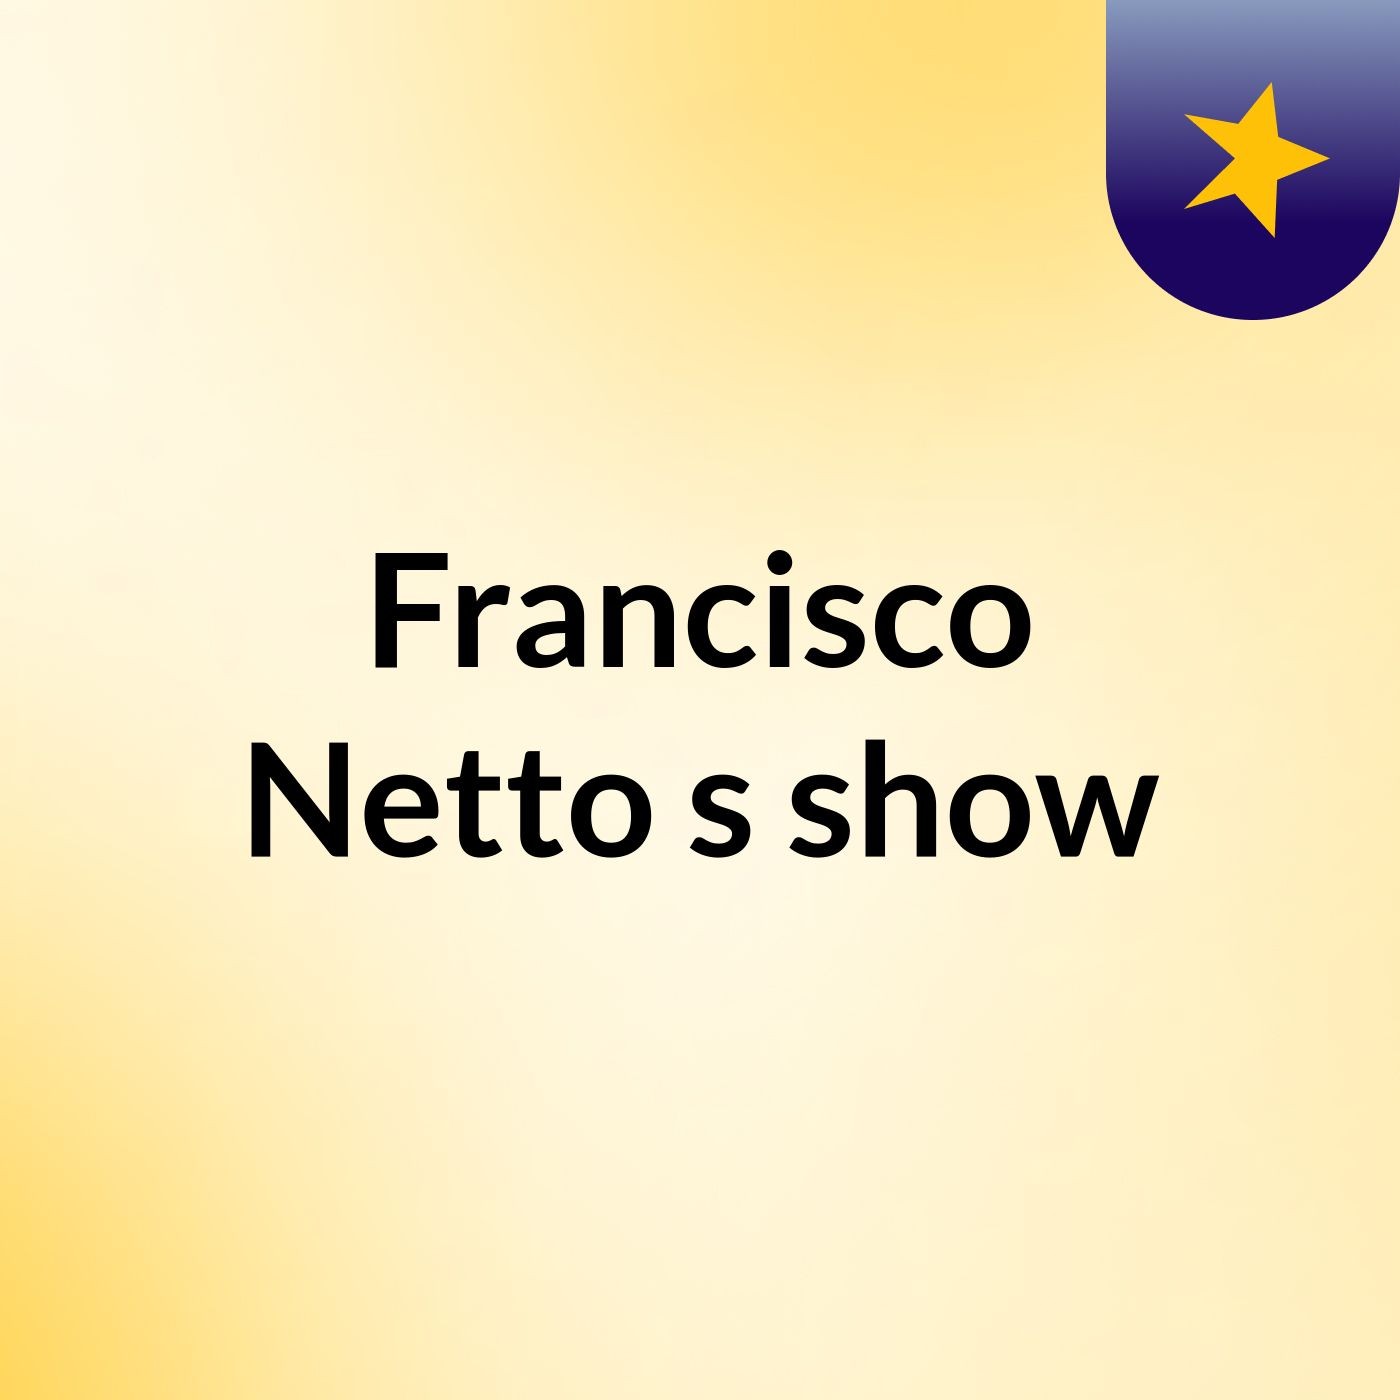 Francisco Netto's show